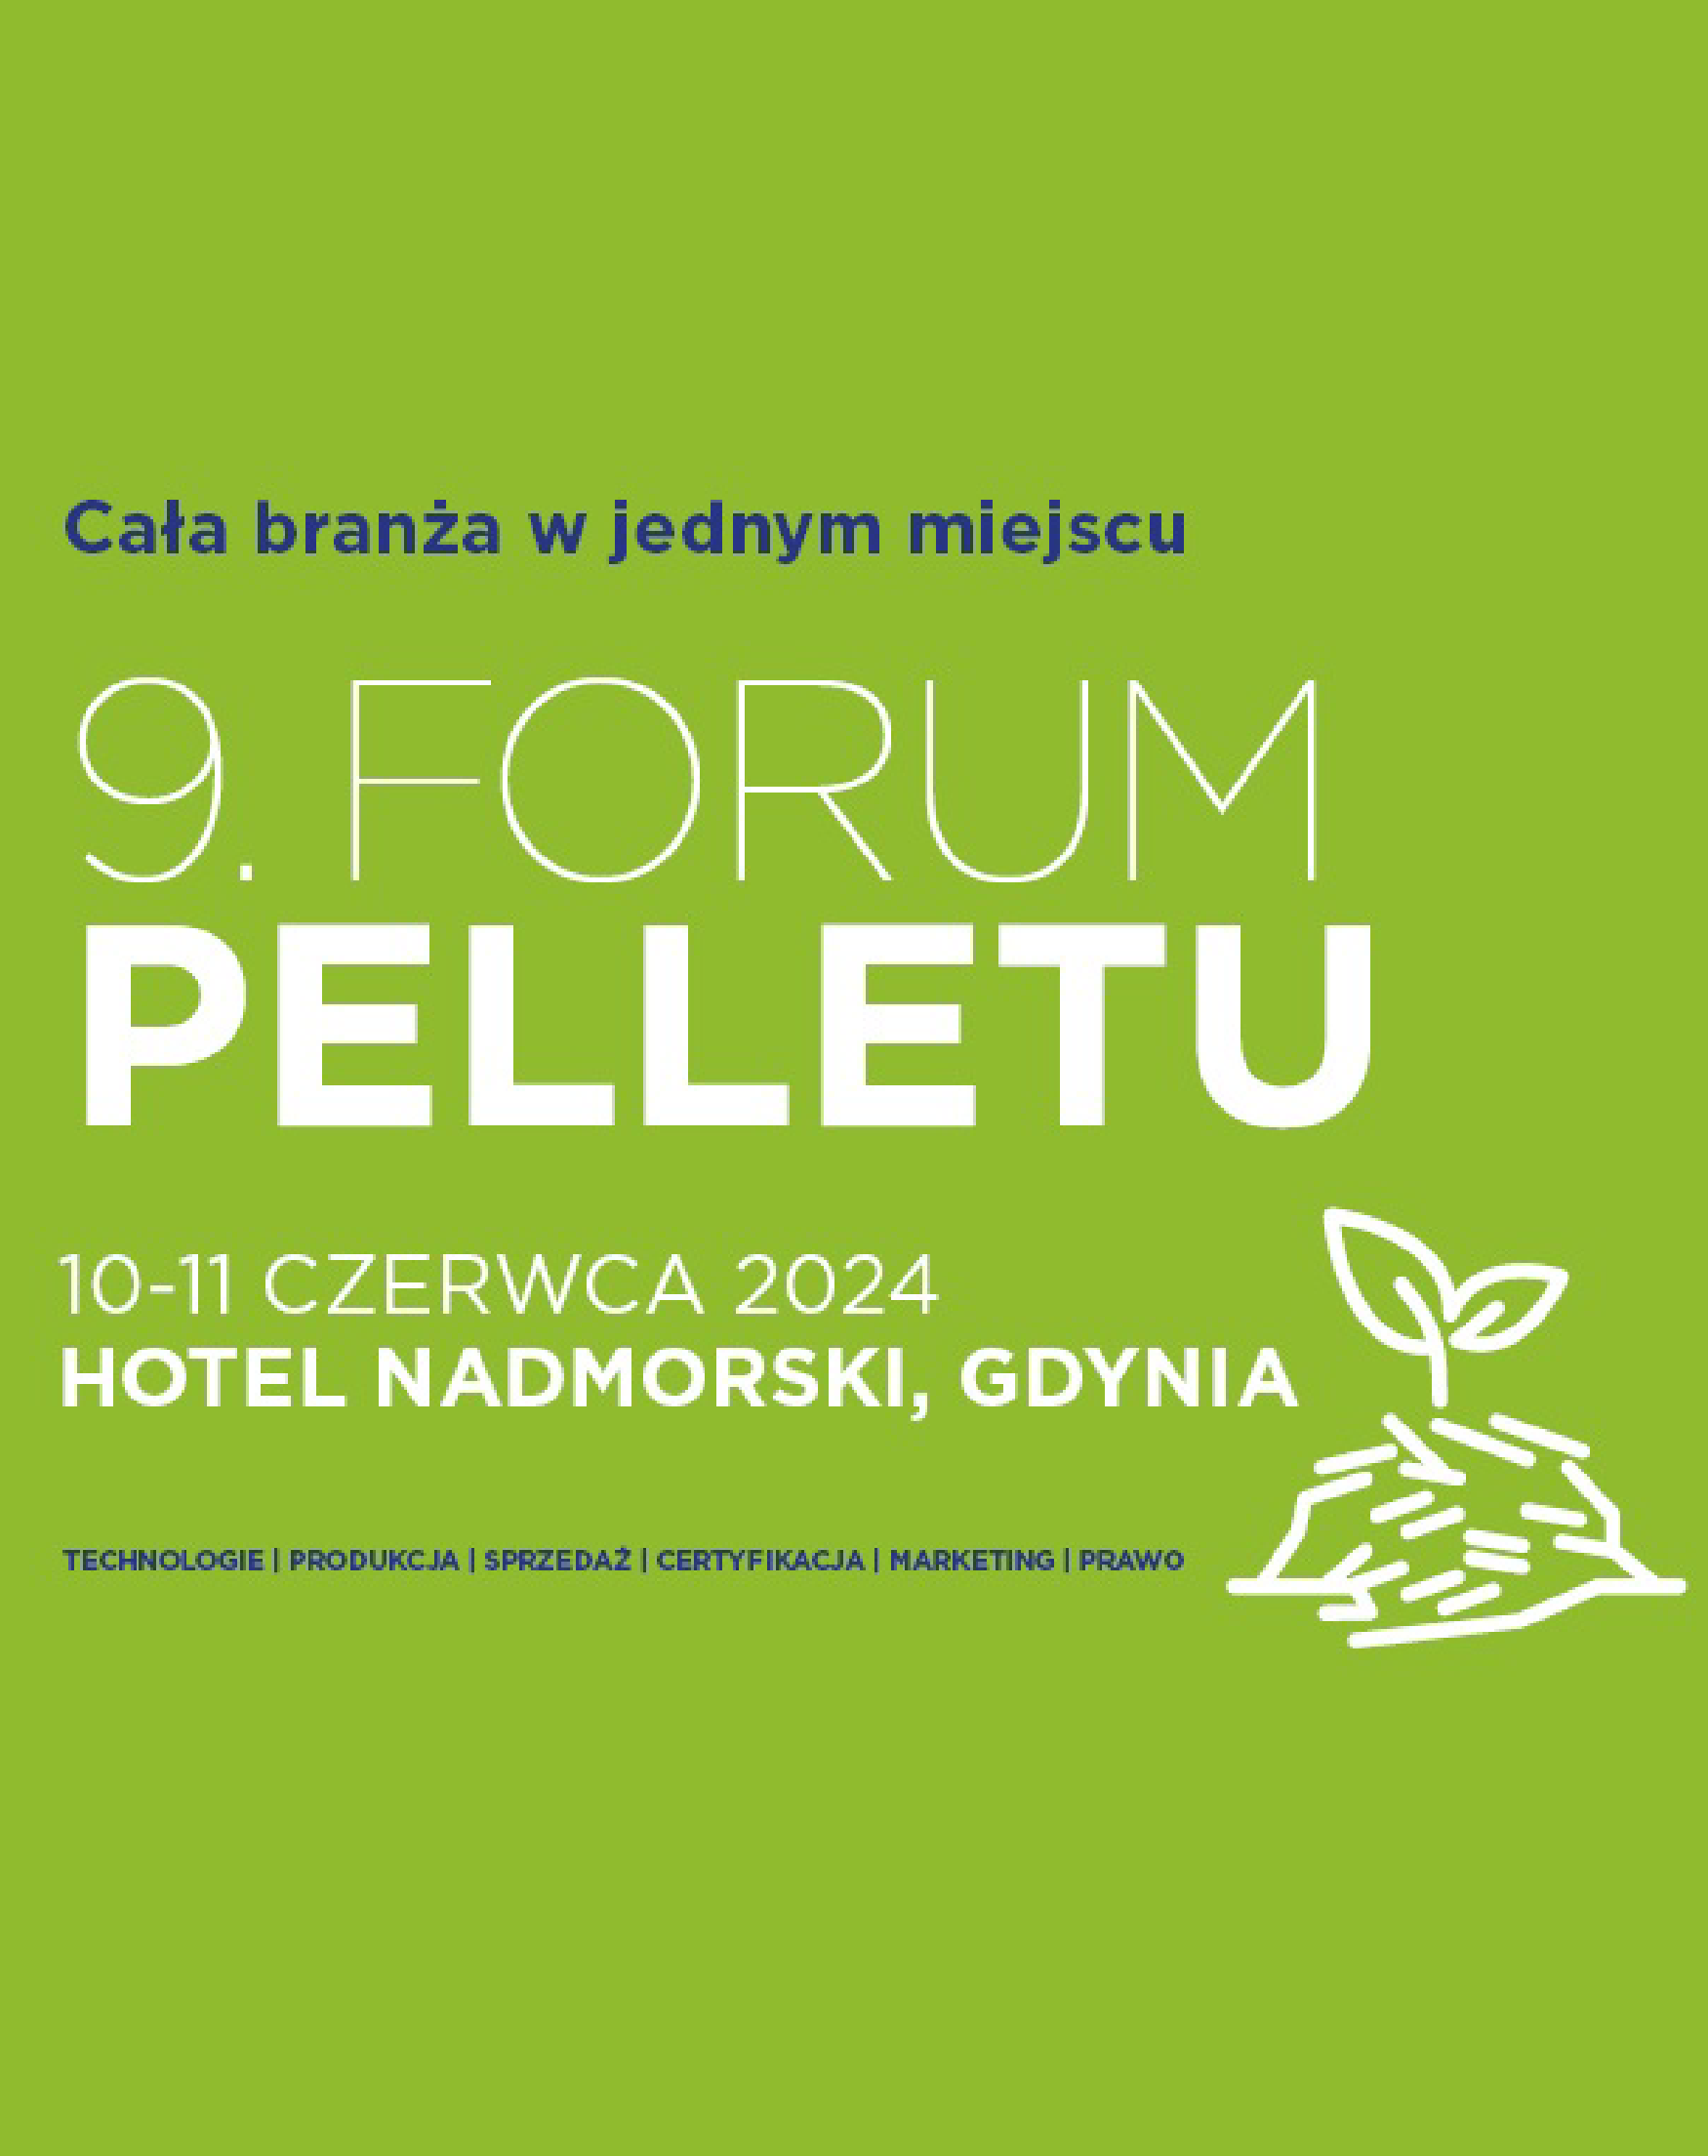 9th Pellet Forum